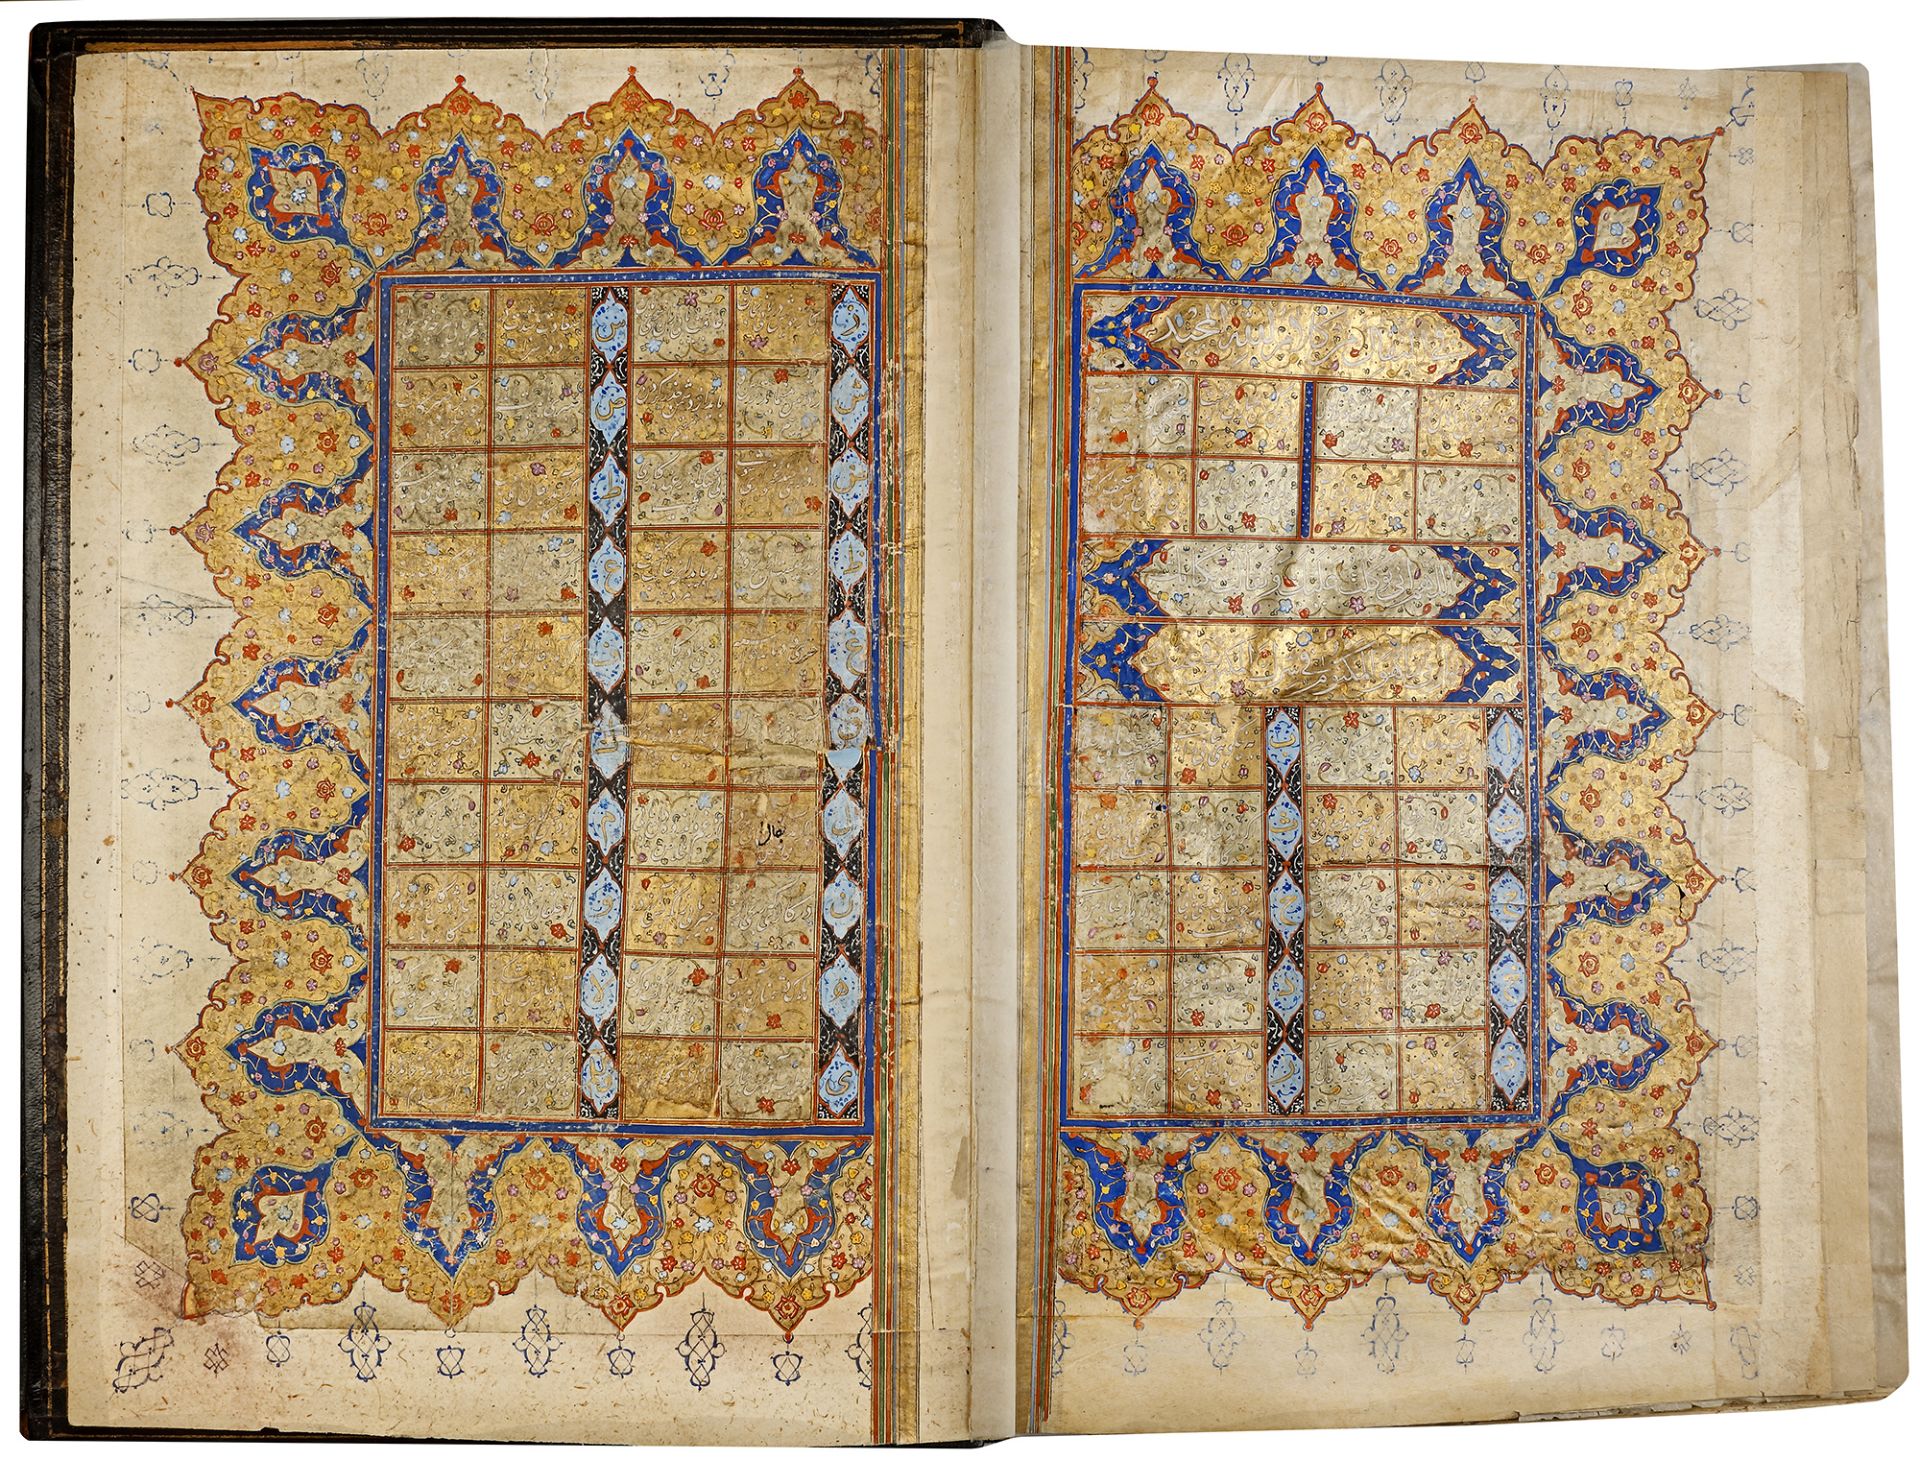 A LARGE ILLUMINATED QURAN, COPIED BY 'ALA'-AL-DIN MUHAMMAD AL-TABRIZI SAFAVID, PERSIA, 16TH CENT - Image 25 of 26